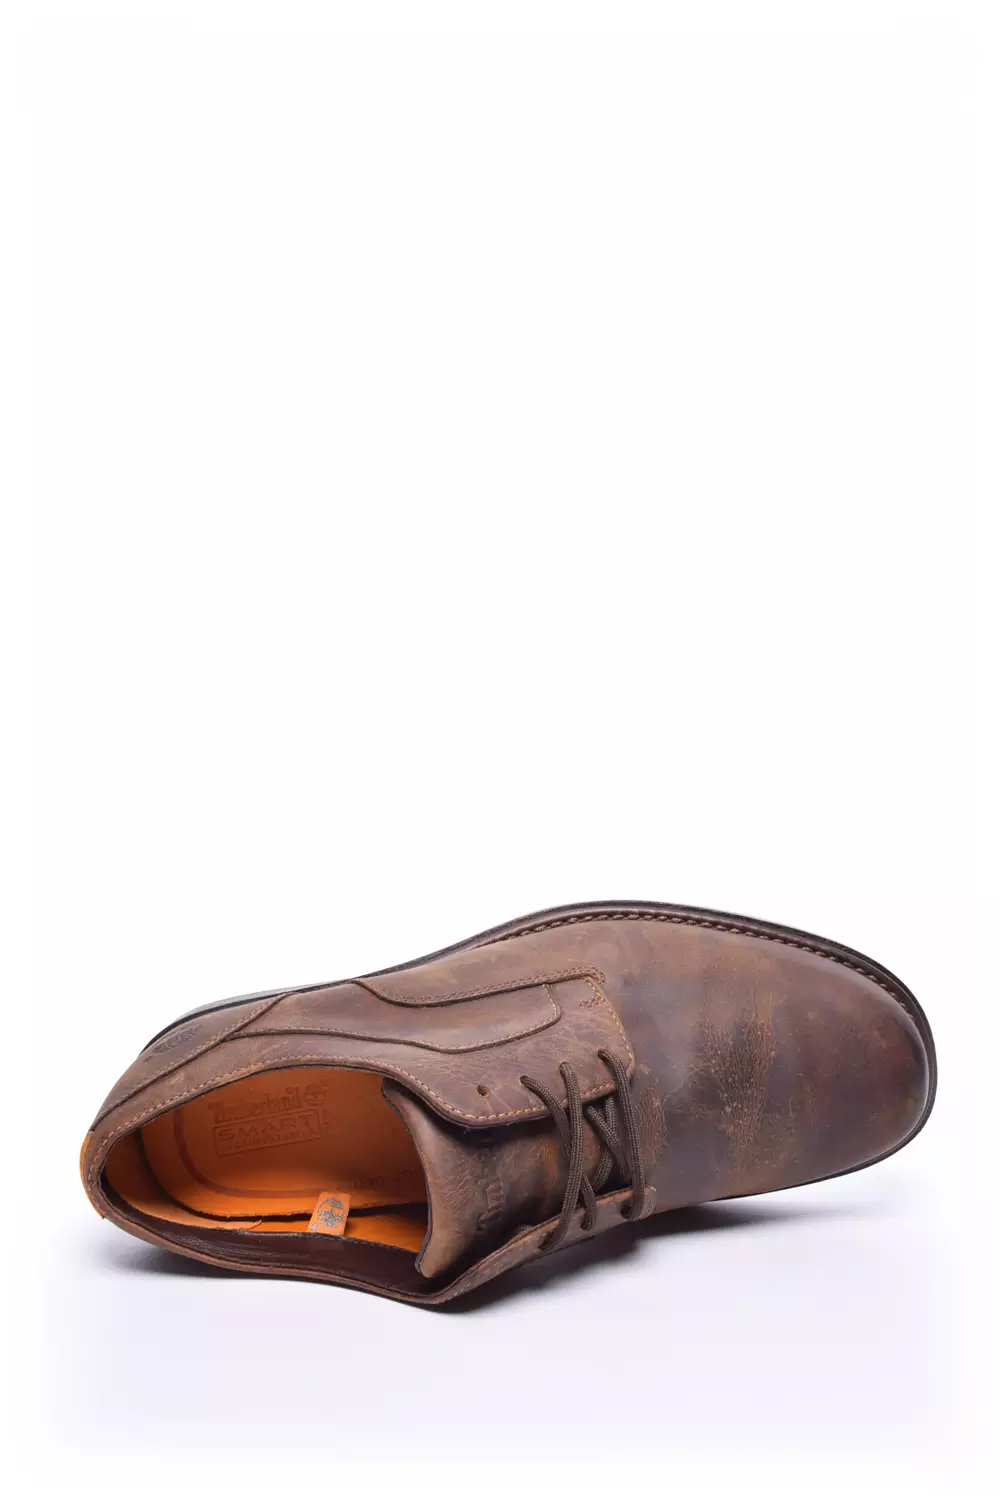 Pantofi barbati impermeabili cu aspect vintage [5]